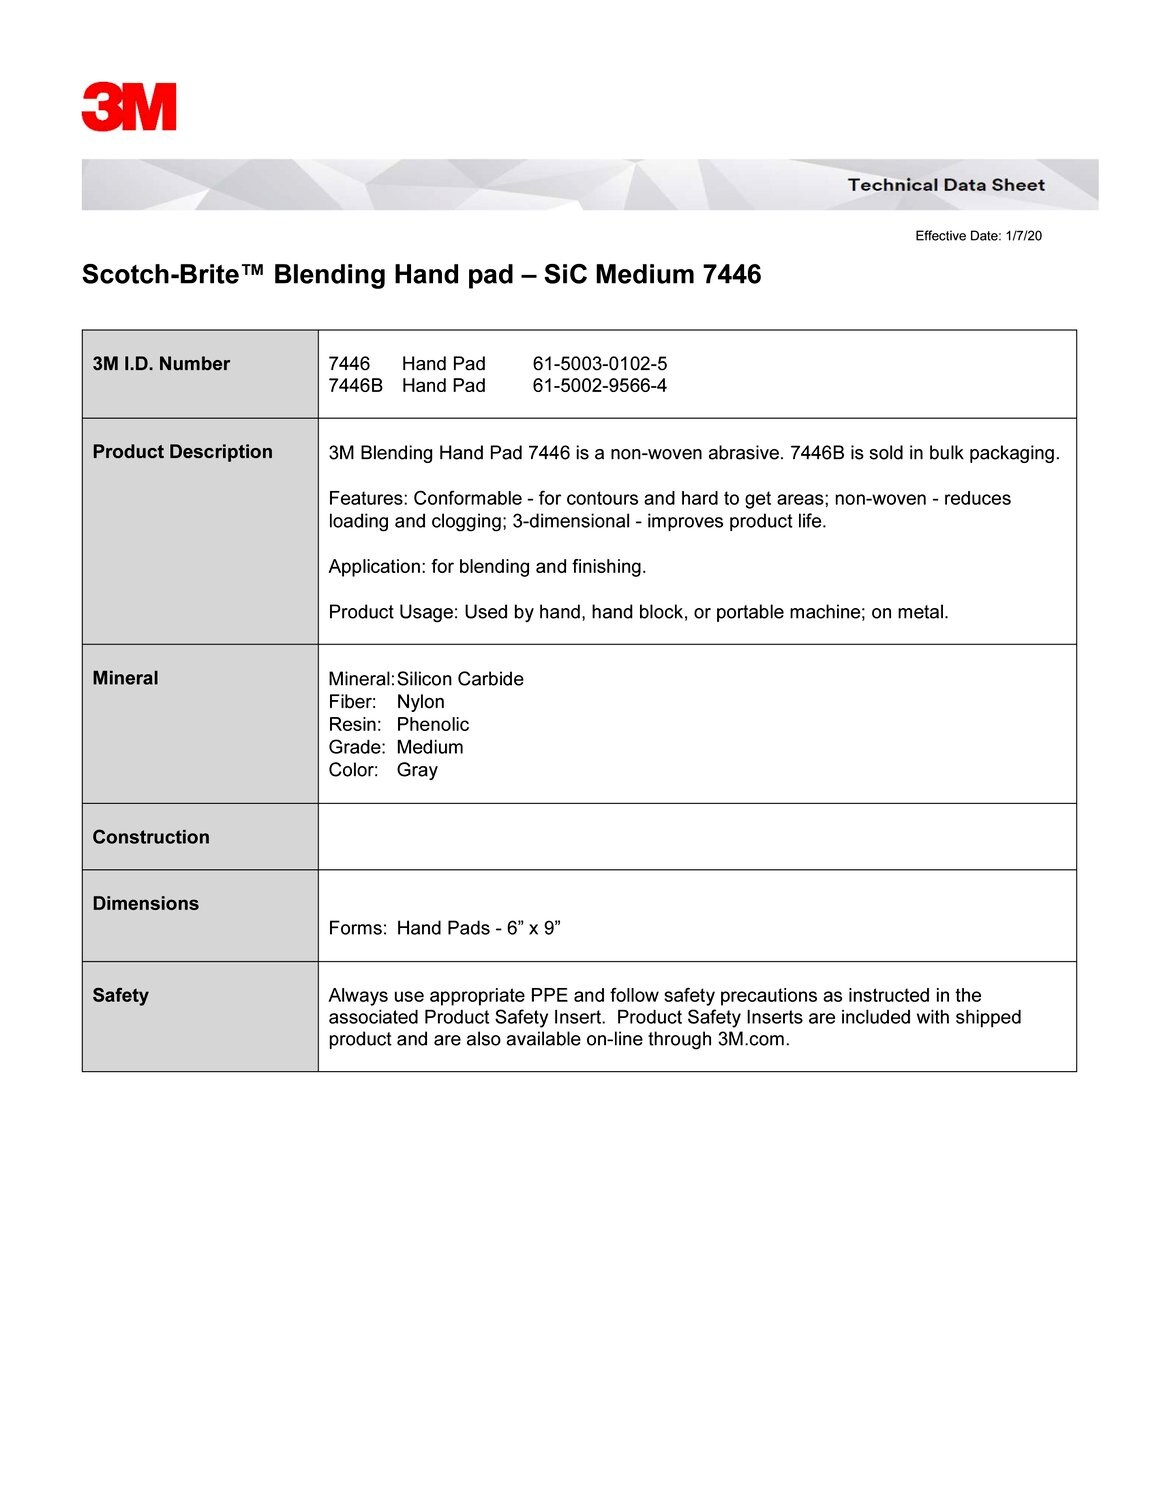 Scotch-Brite™ Blending Hand Pad 7446, 152 mm x 228 mm, S MED